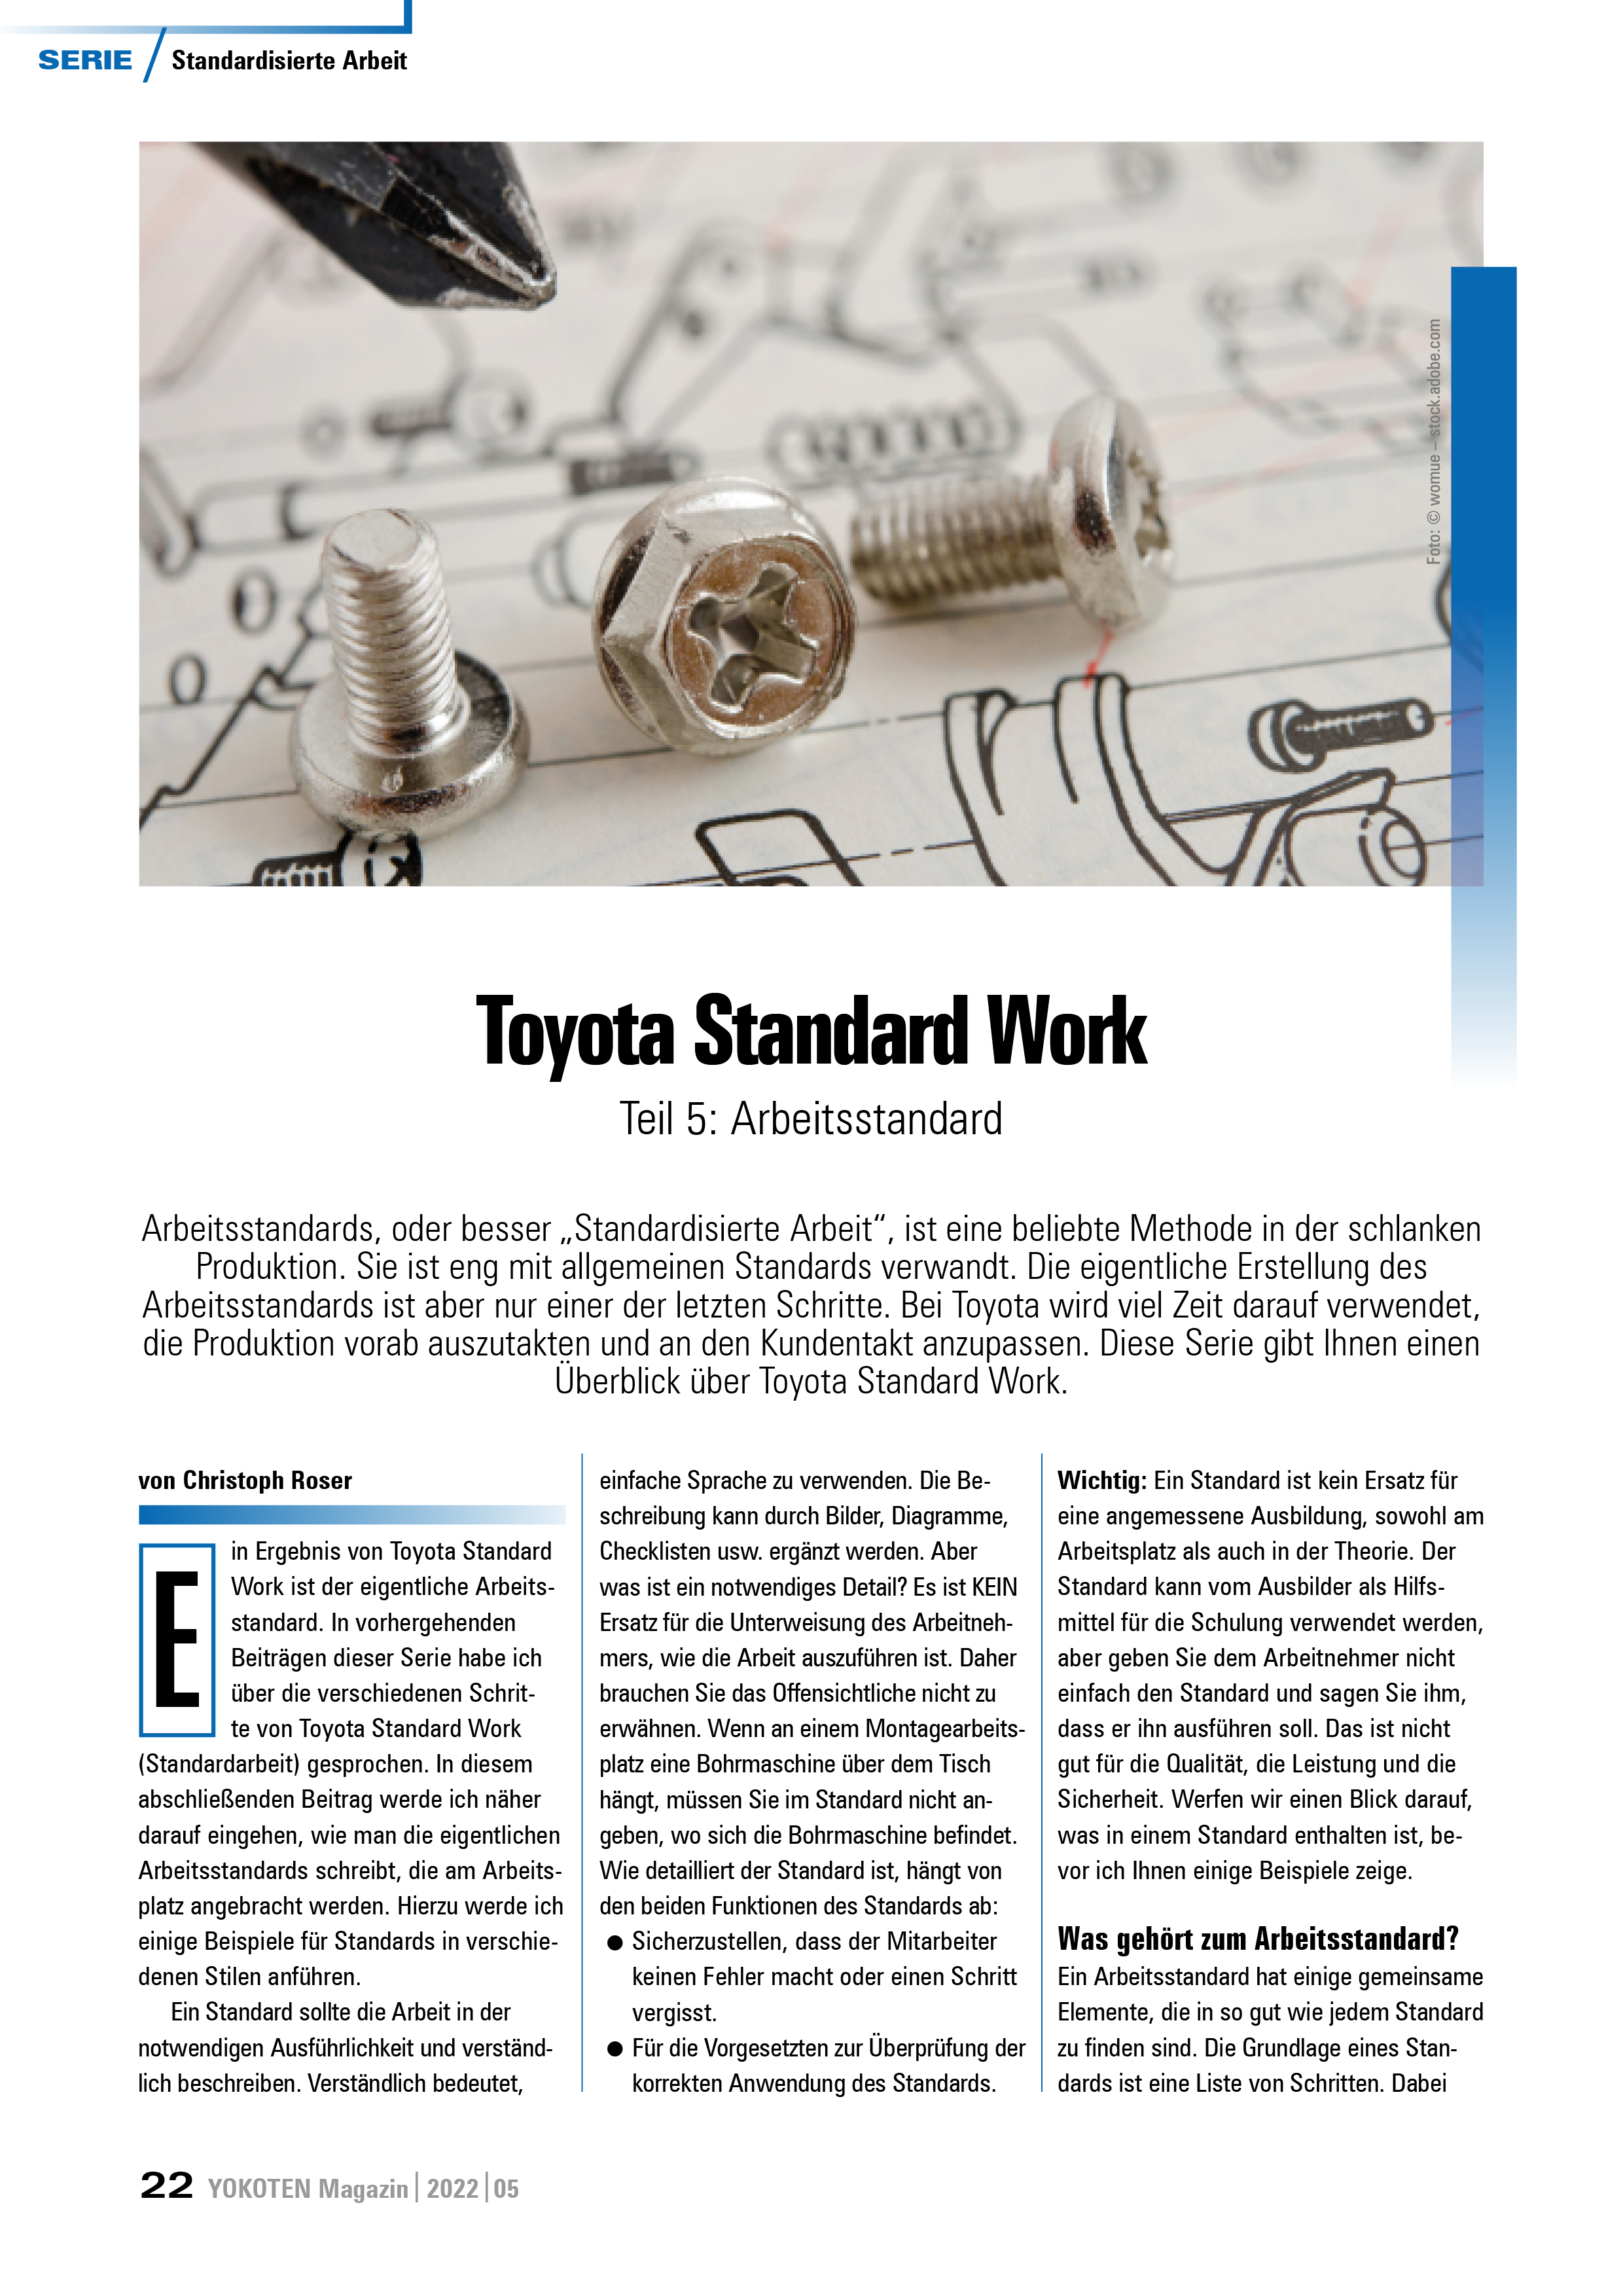 YOKOTEN-Artikel: Toyota Standard Work